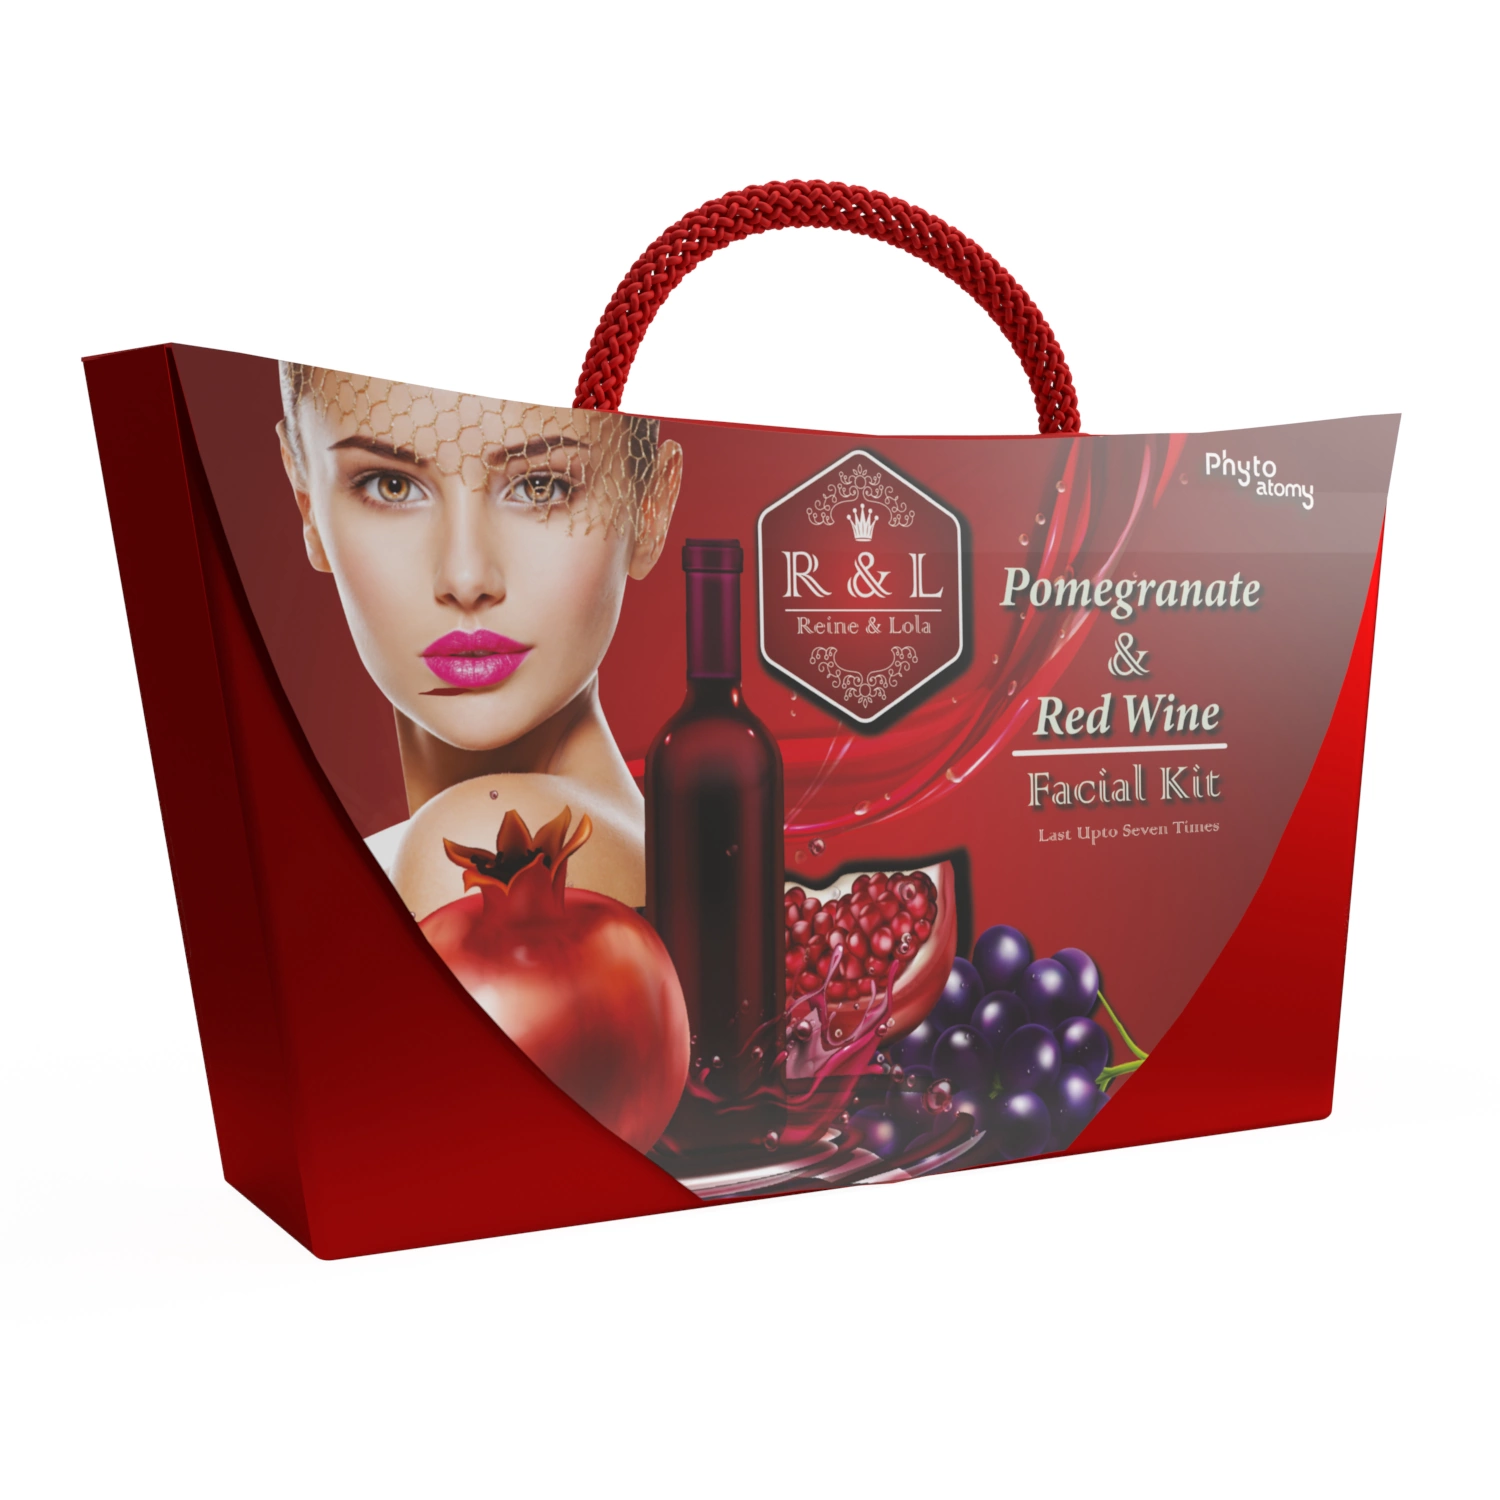 R & L Pomegranate & Red Wine Facial Kit